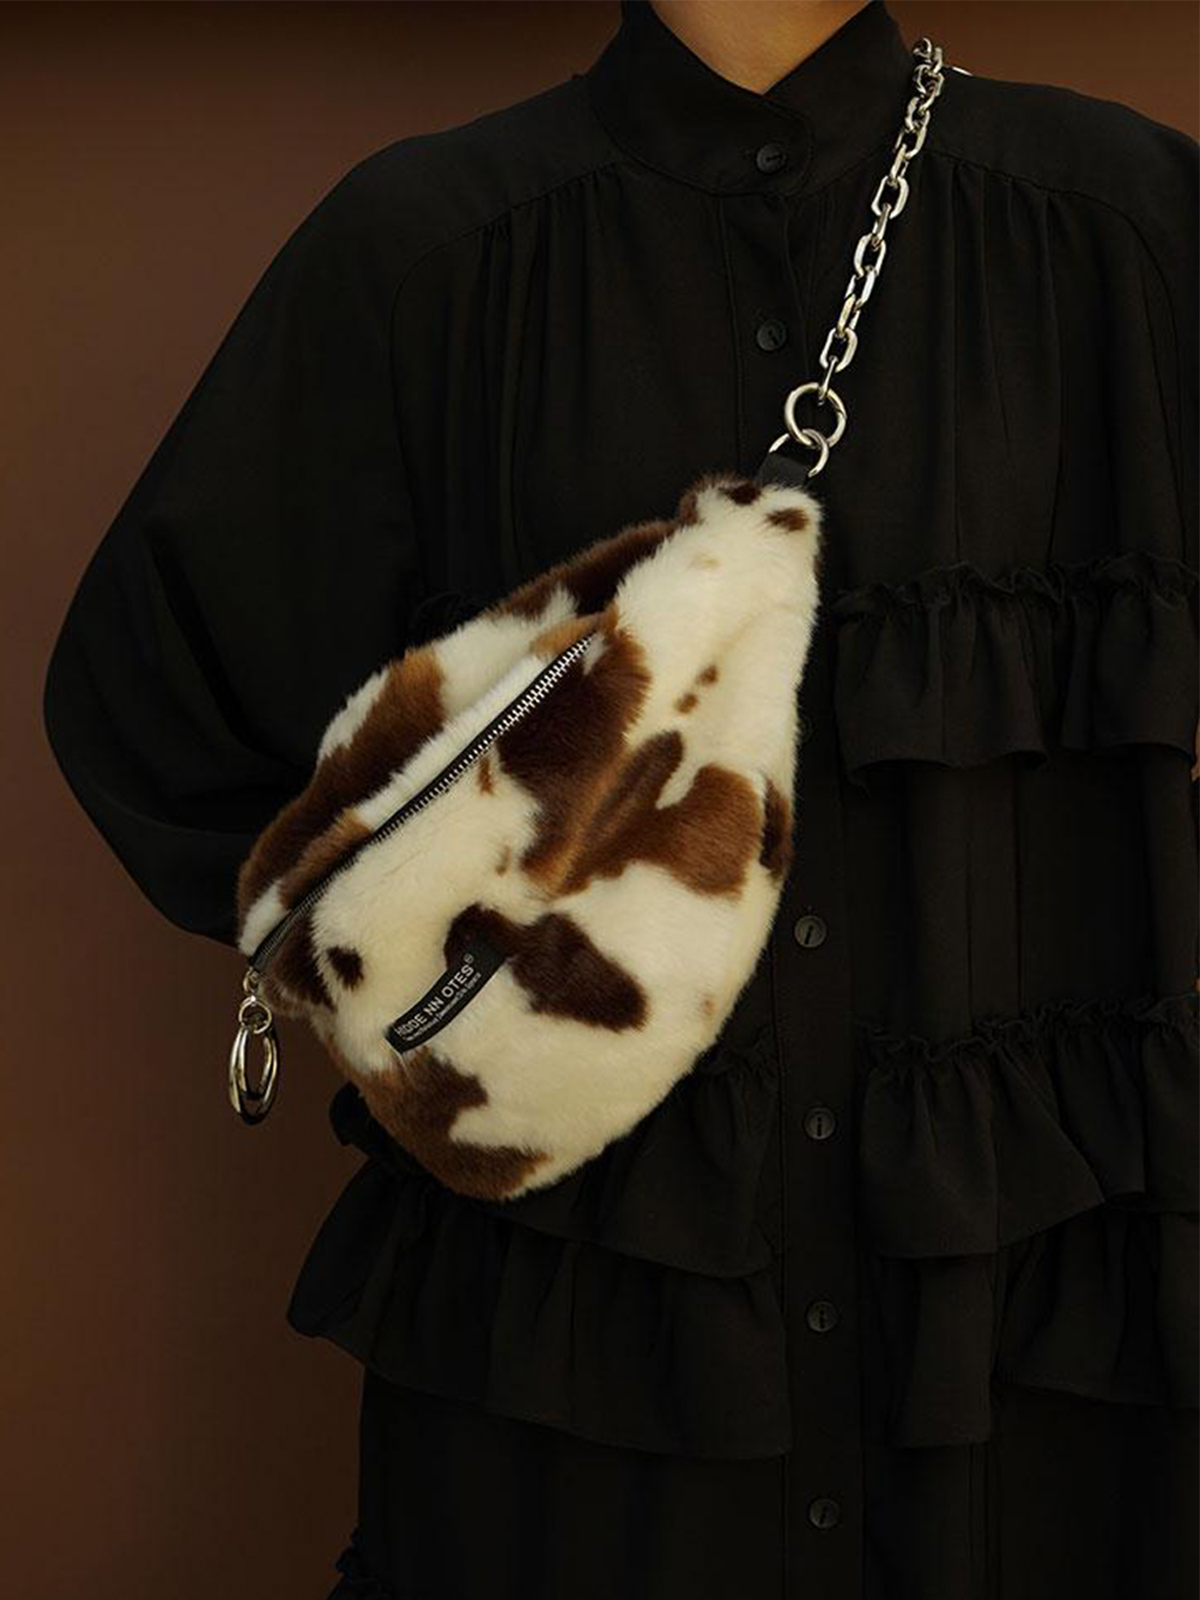 HIDDENNOTES Leopard Print Faux Fur Shoulder Bag – Slowliving Lifestyle